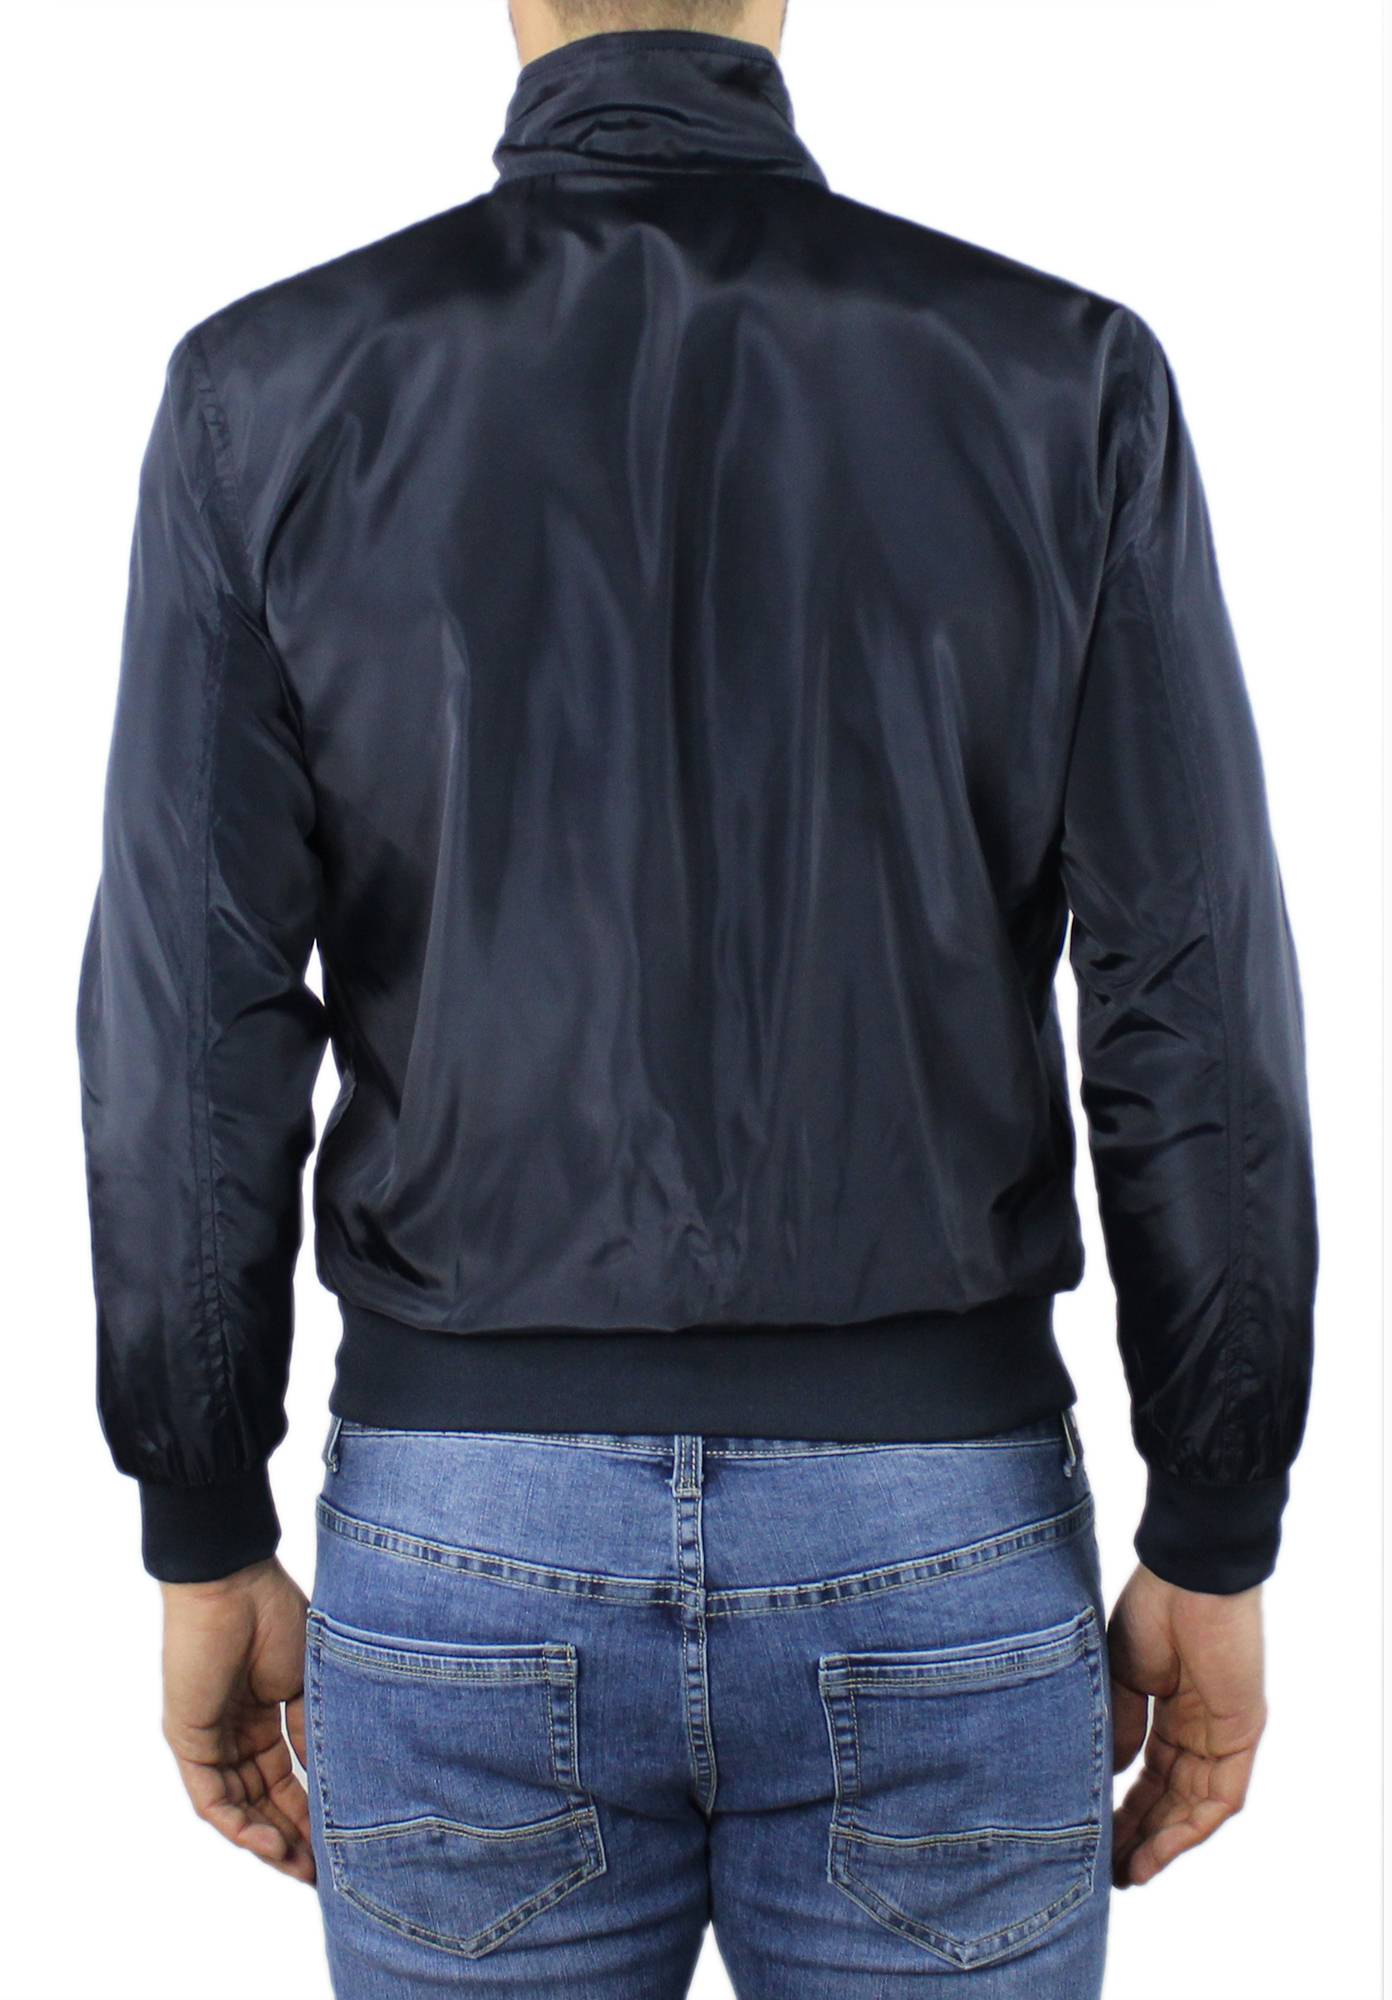 Men's Spring Slim Fit Wind Jacket Lightweight Jacket Waterproof | eBay